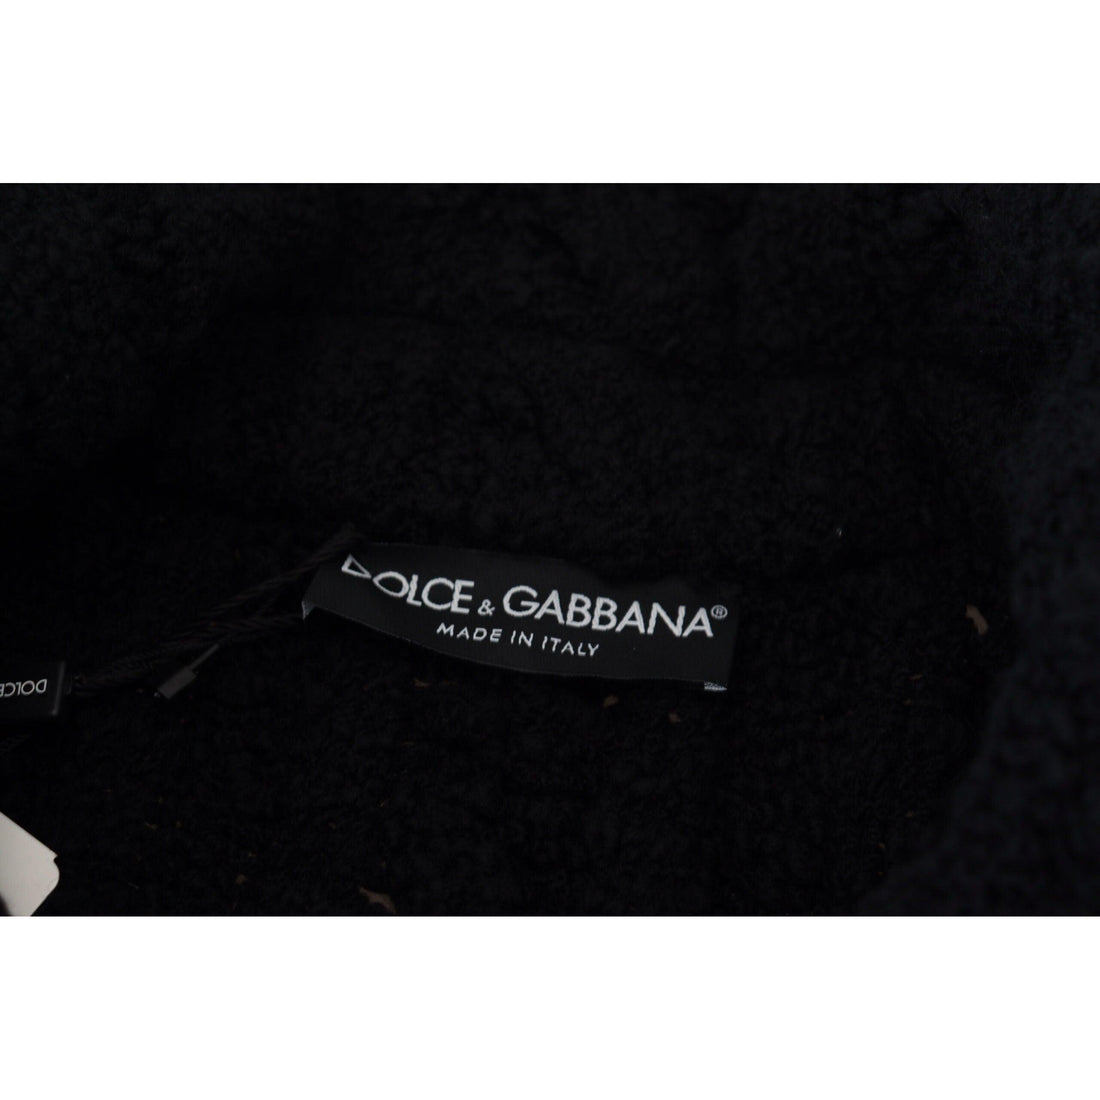 Dolce & Gabbana Elegant Black Wool-Cashmere Cardigan Sweater